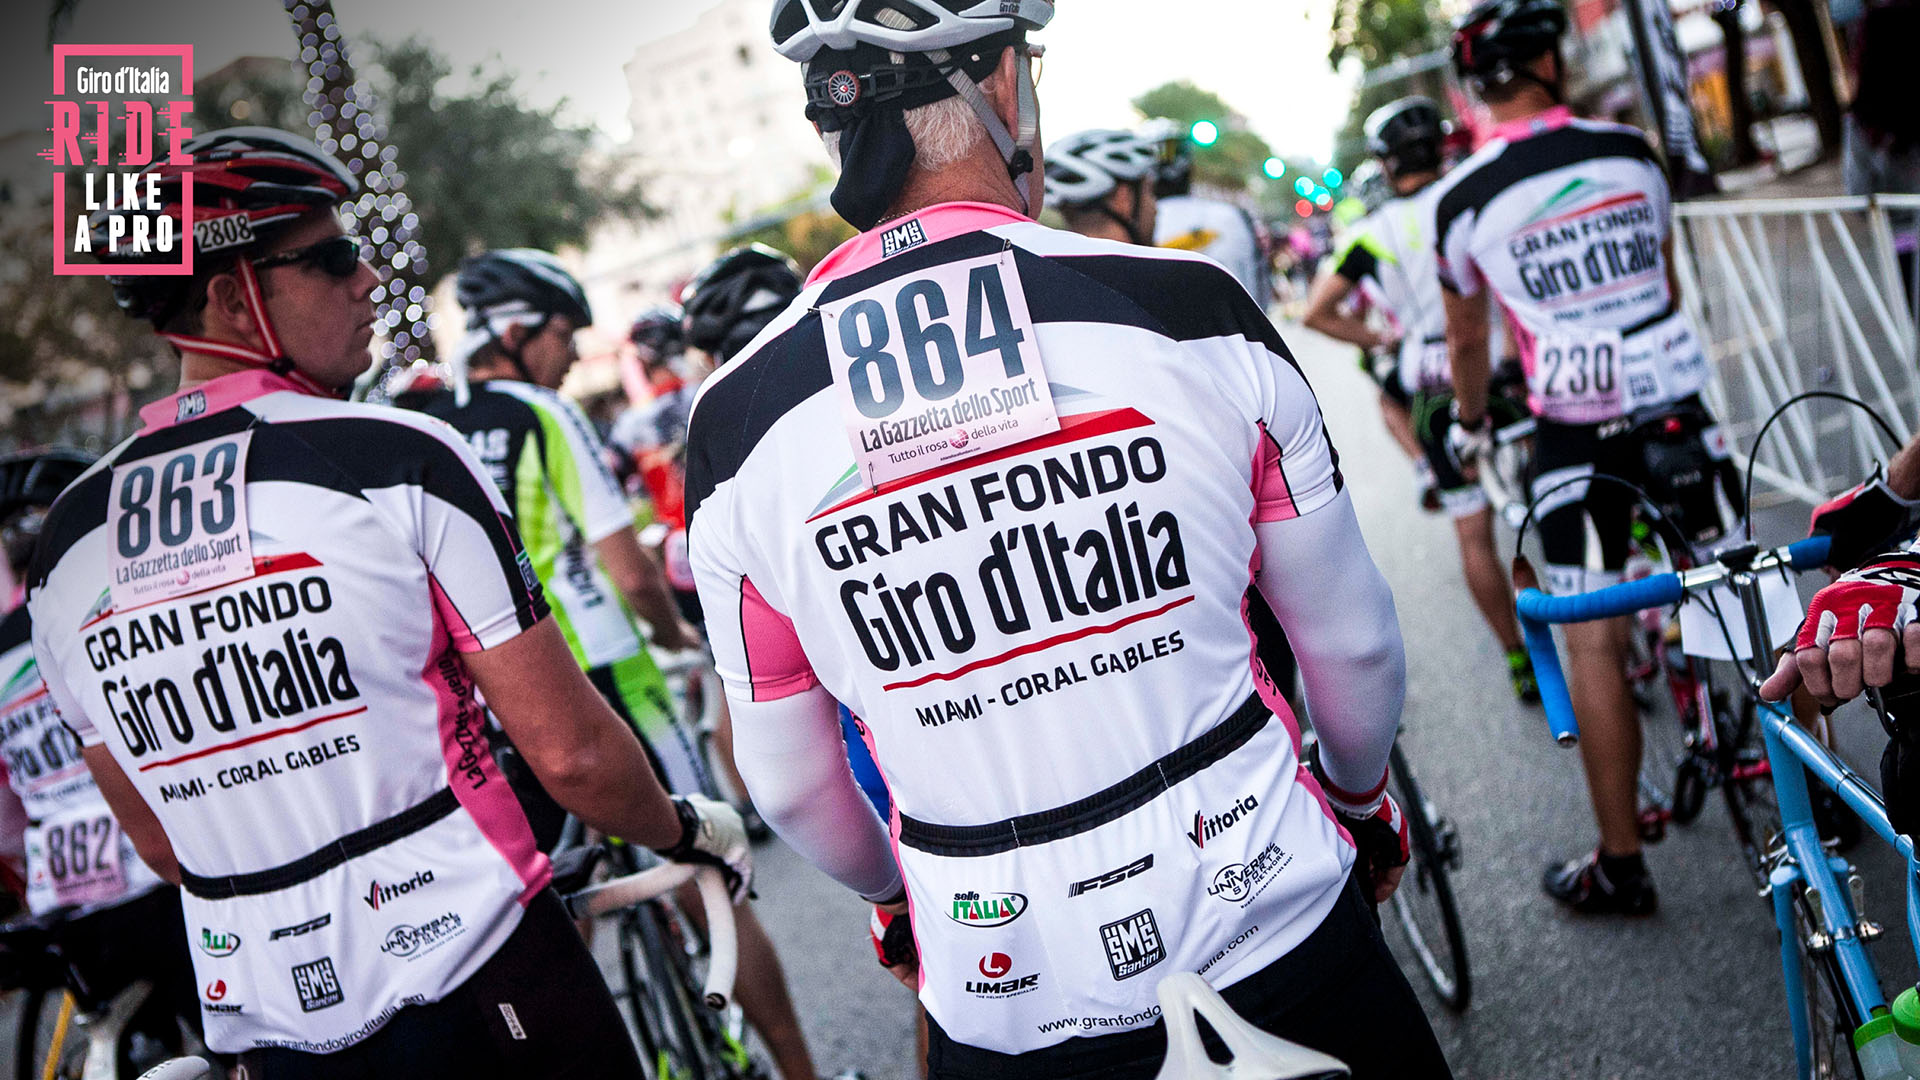 Giro d’Italia Ride Like A Pro will settle in China